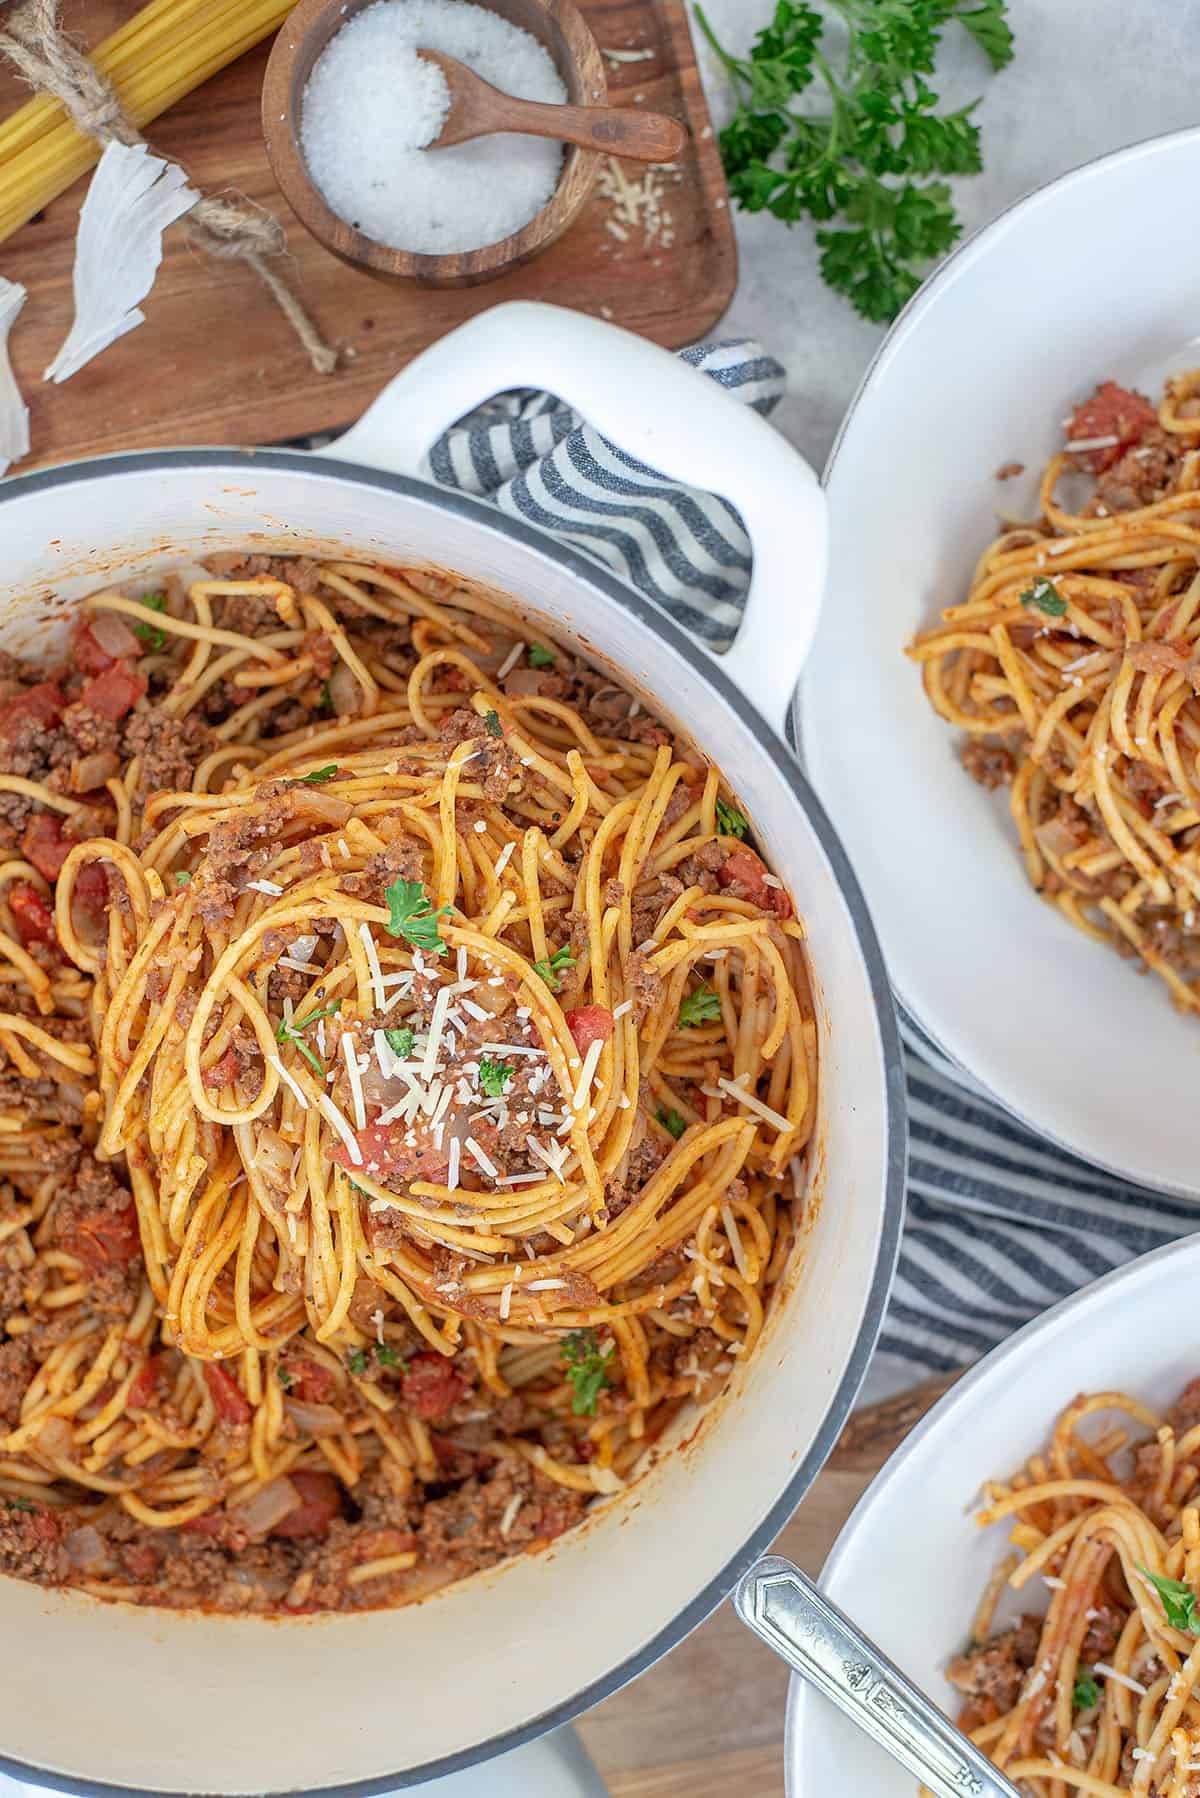 https://www.bunsinmyoven.com/wp-content/uploads/2018/02/one-pot-spaghetti-recipe-1.jpg